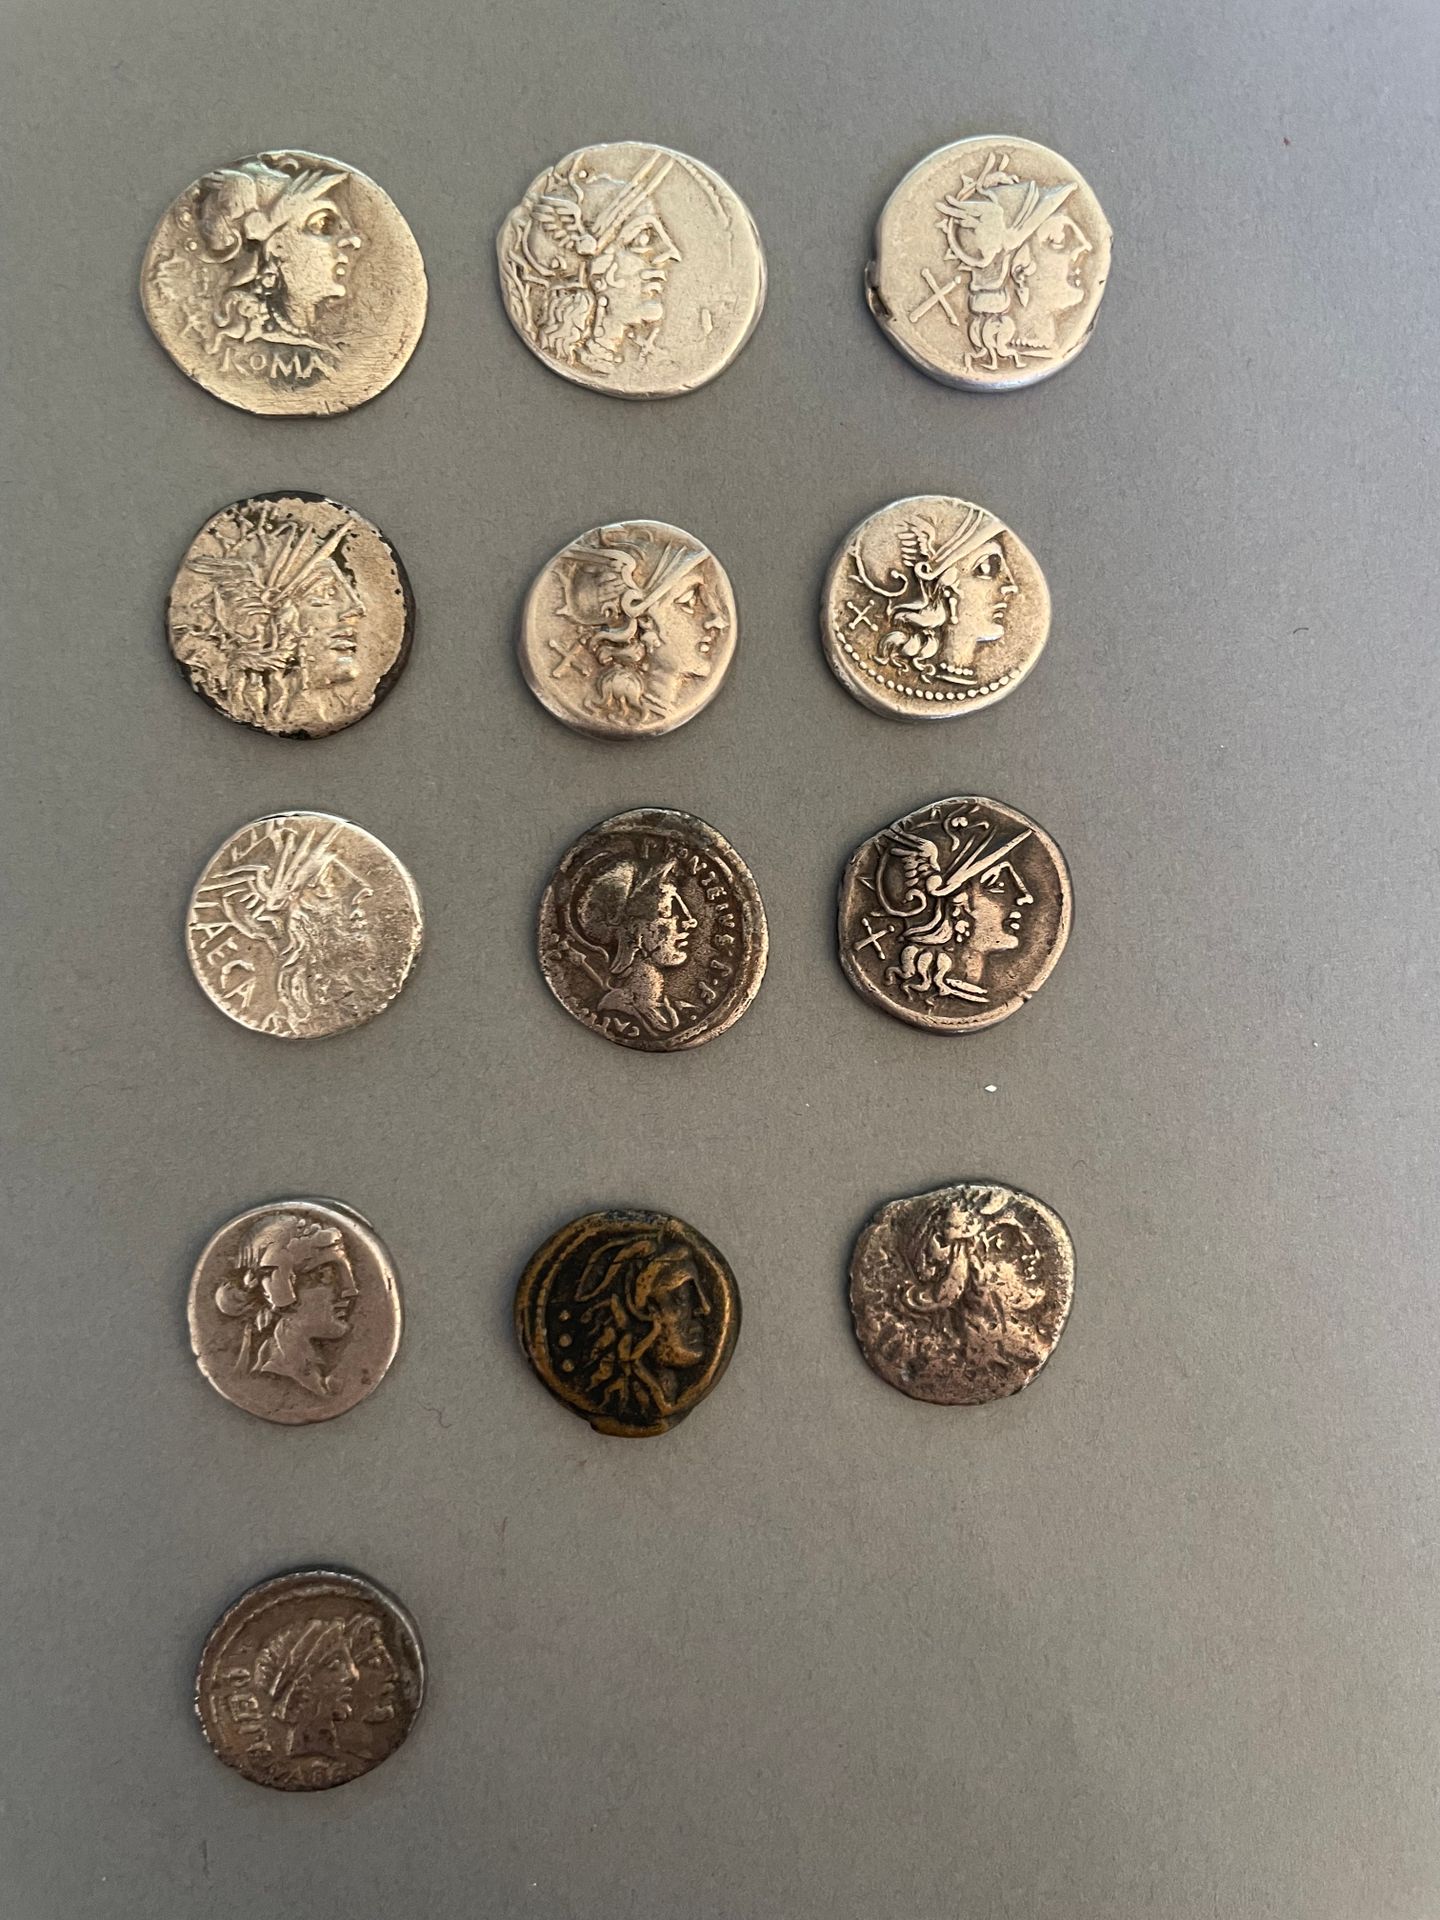 Null 罗马共和国。
本拍品共有12枚第纳尔，主要是Dioscuri，并附有1枚带有海格力斯头像的四角形硬币。
TTB